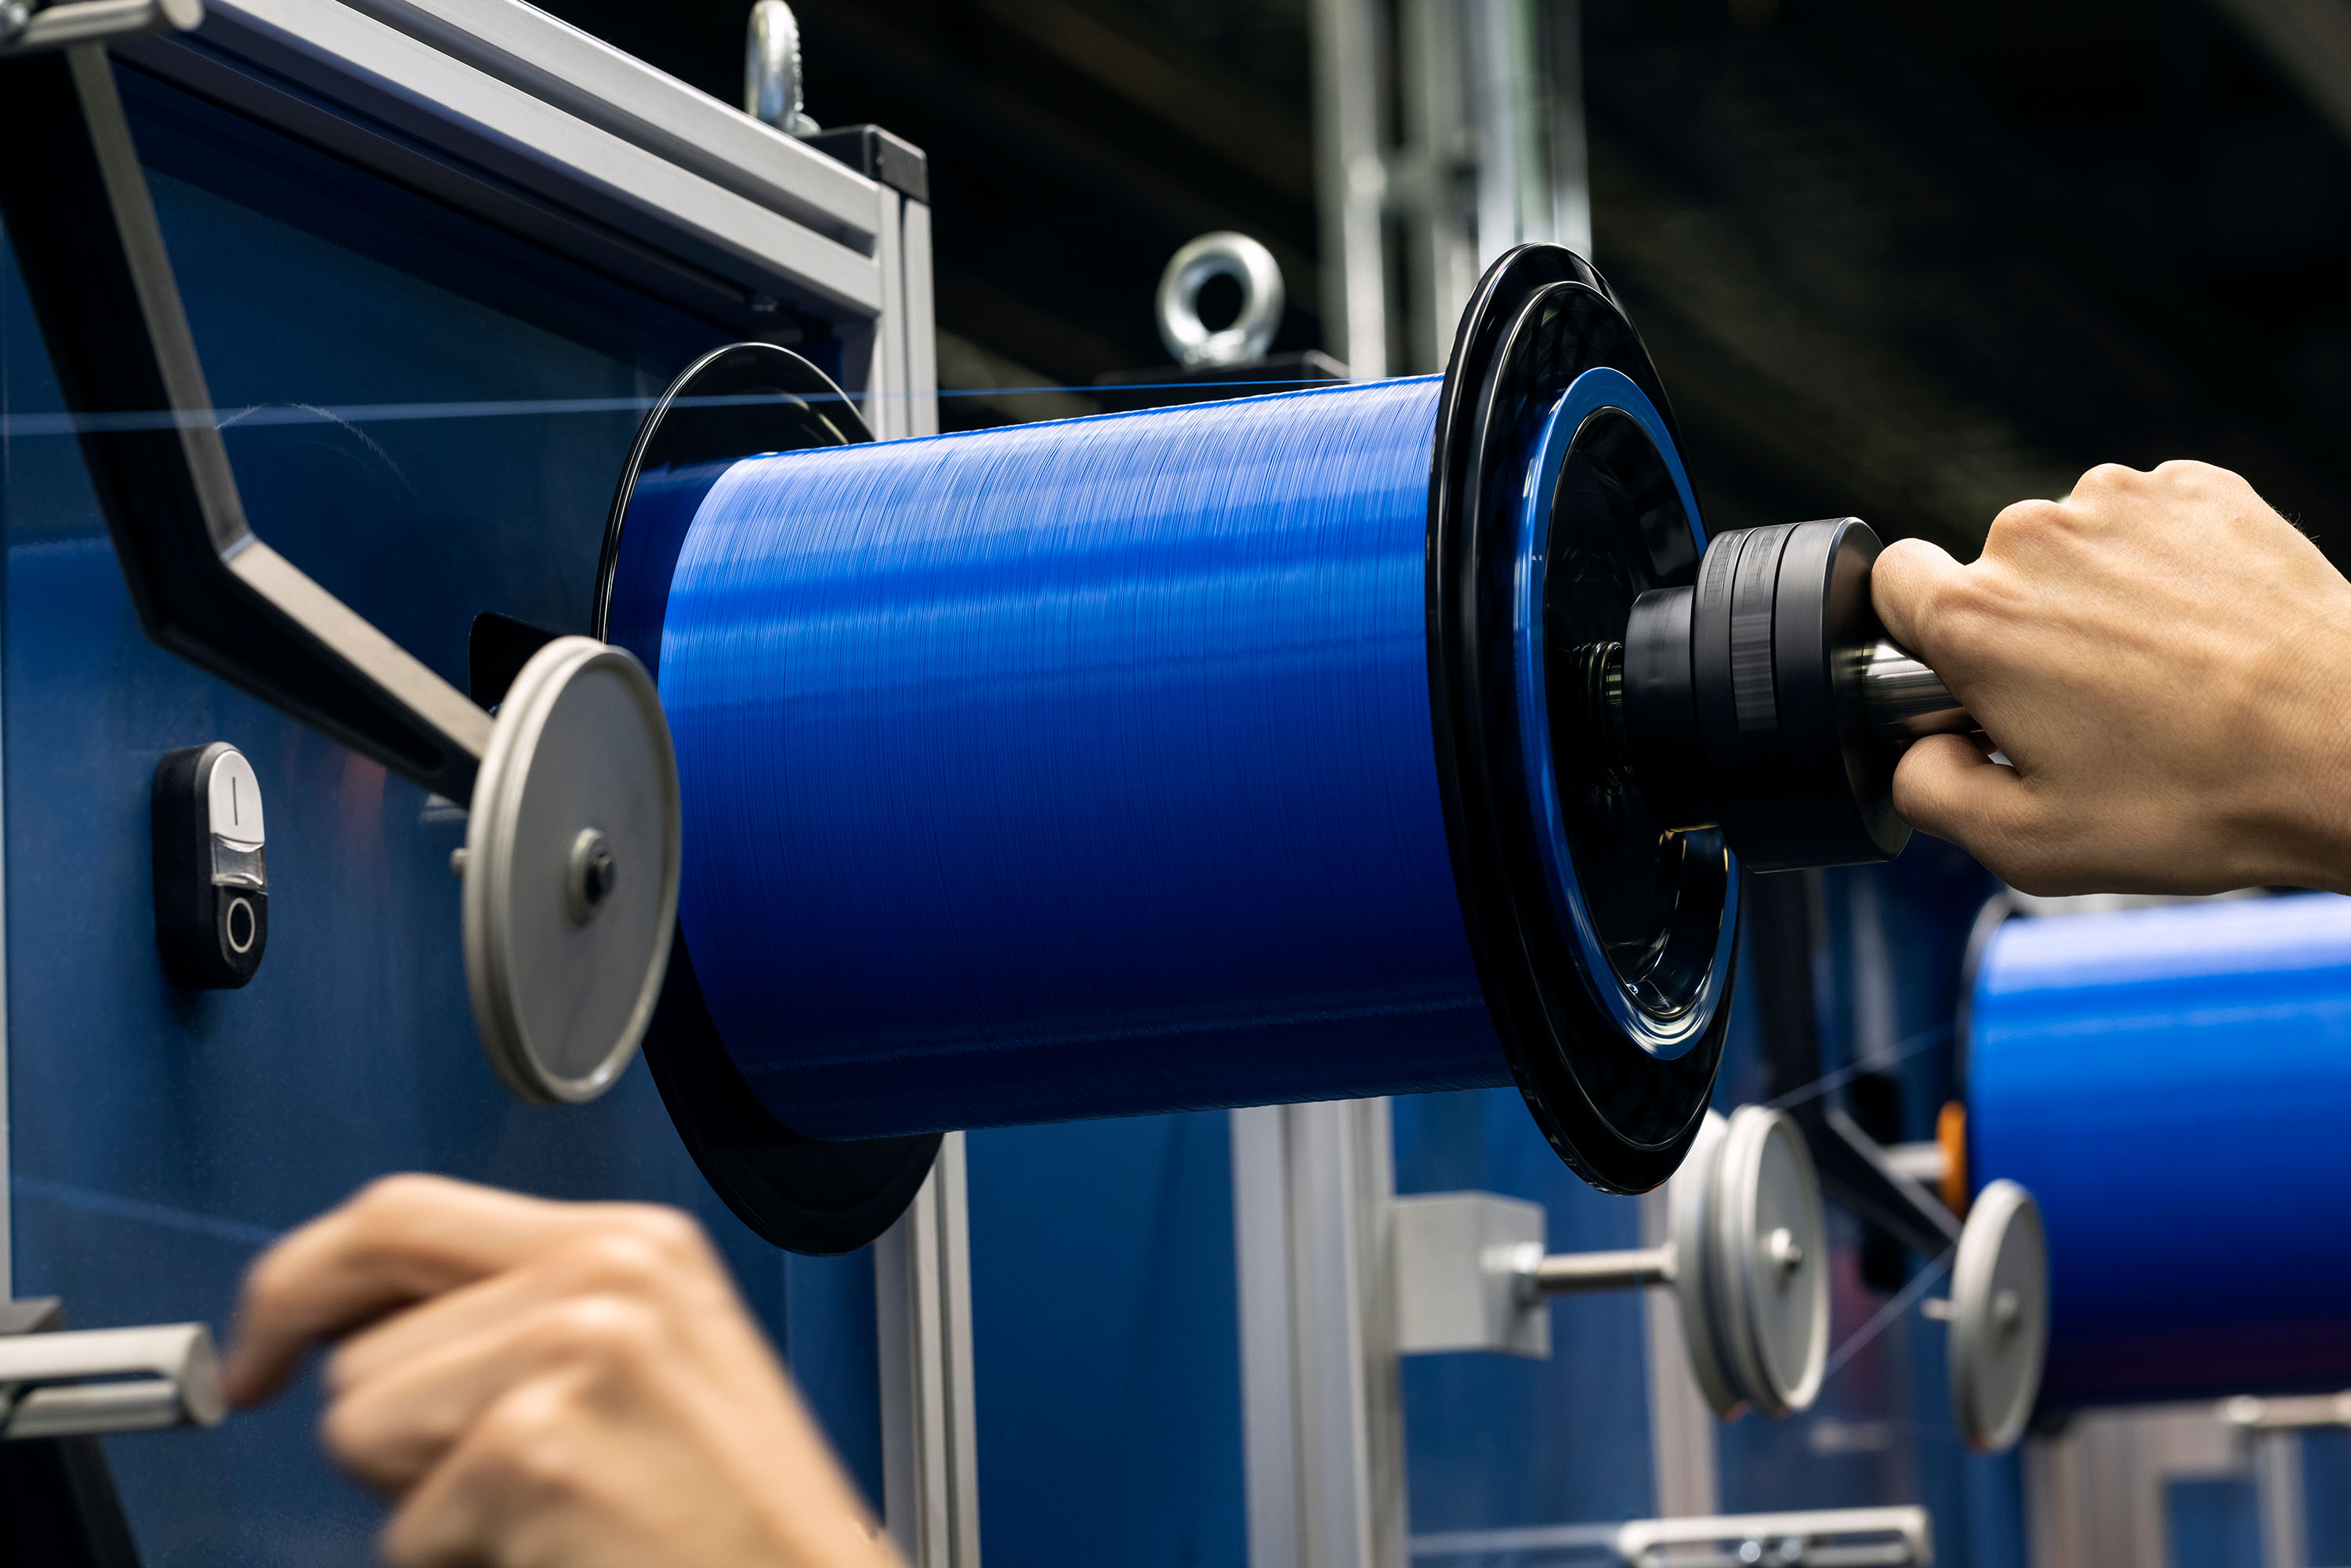 Hands attach a black spool of blue fiber thread to a machine in a factory setting.